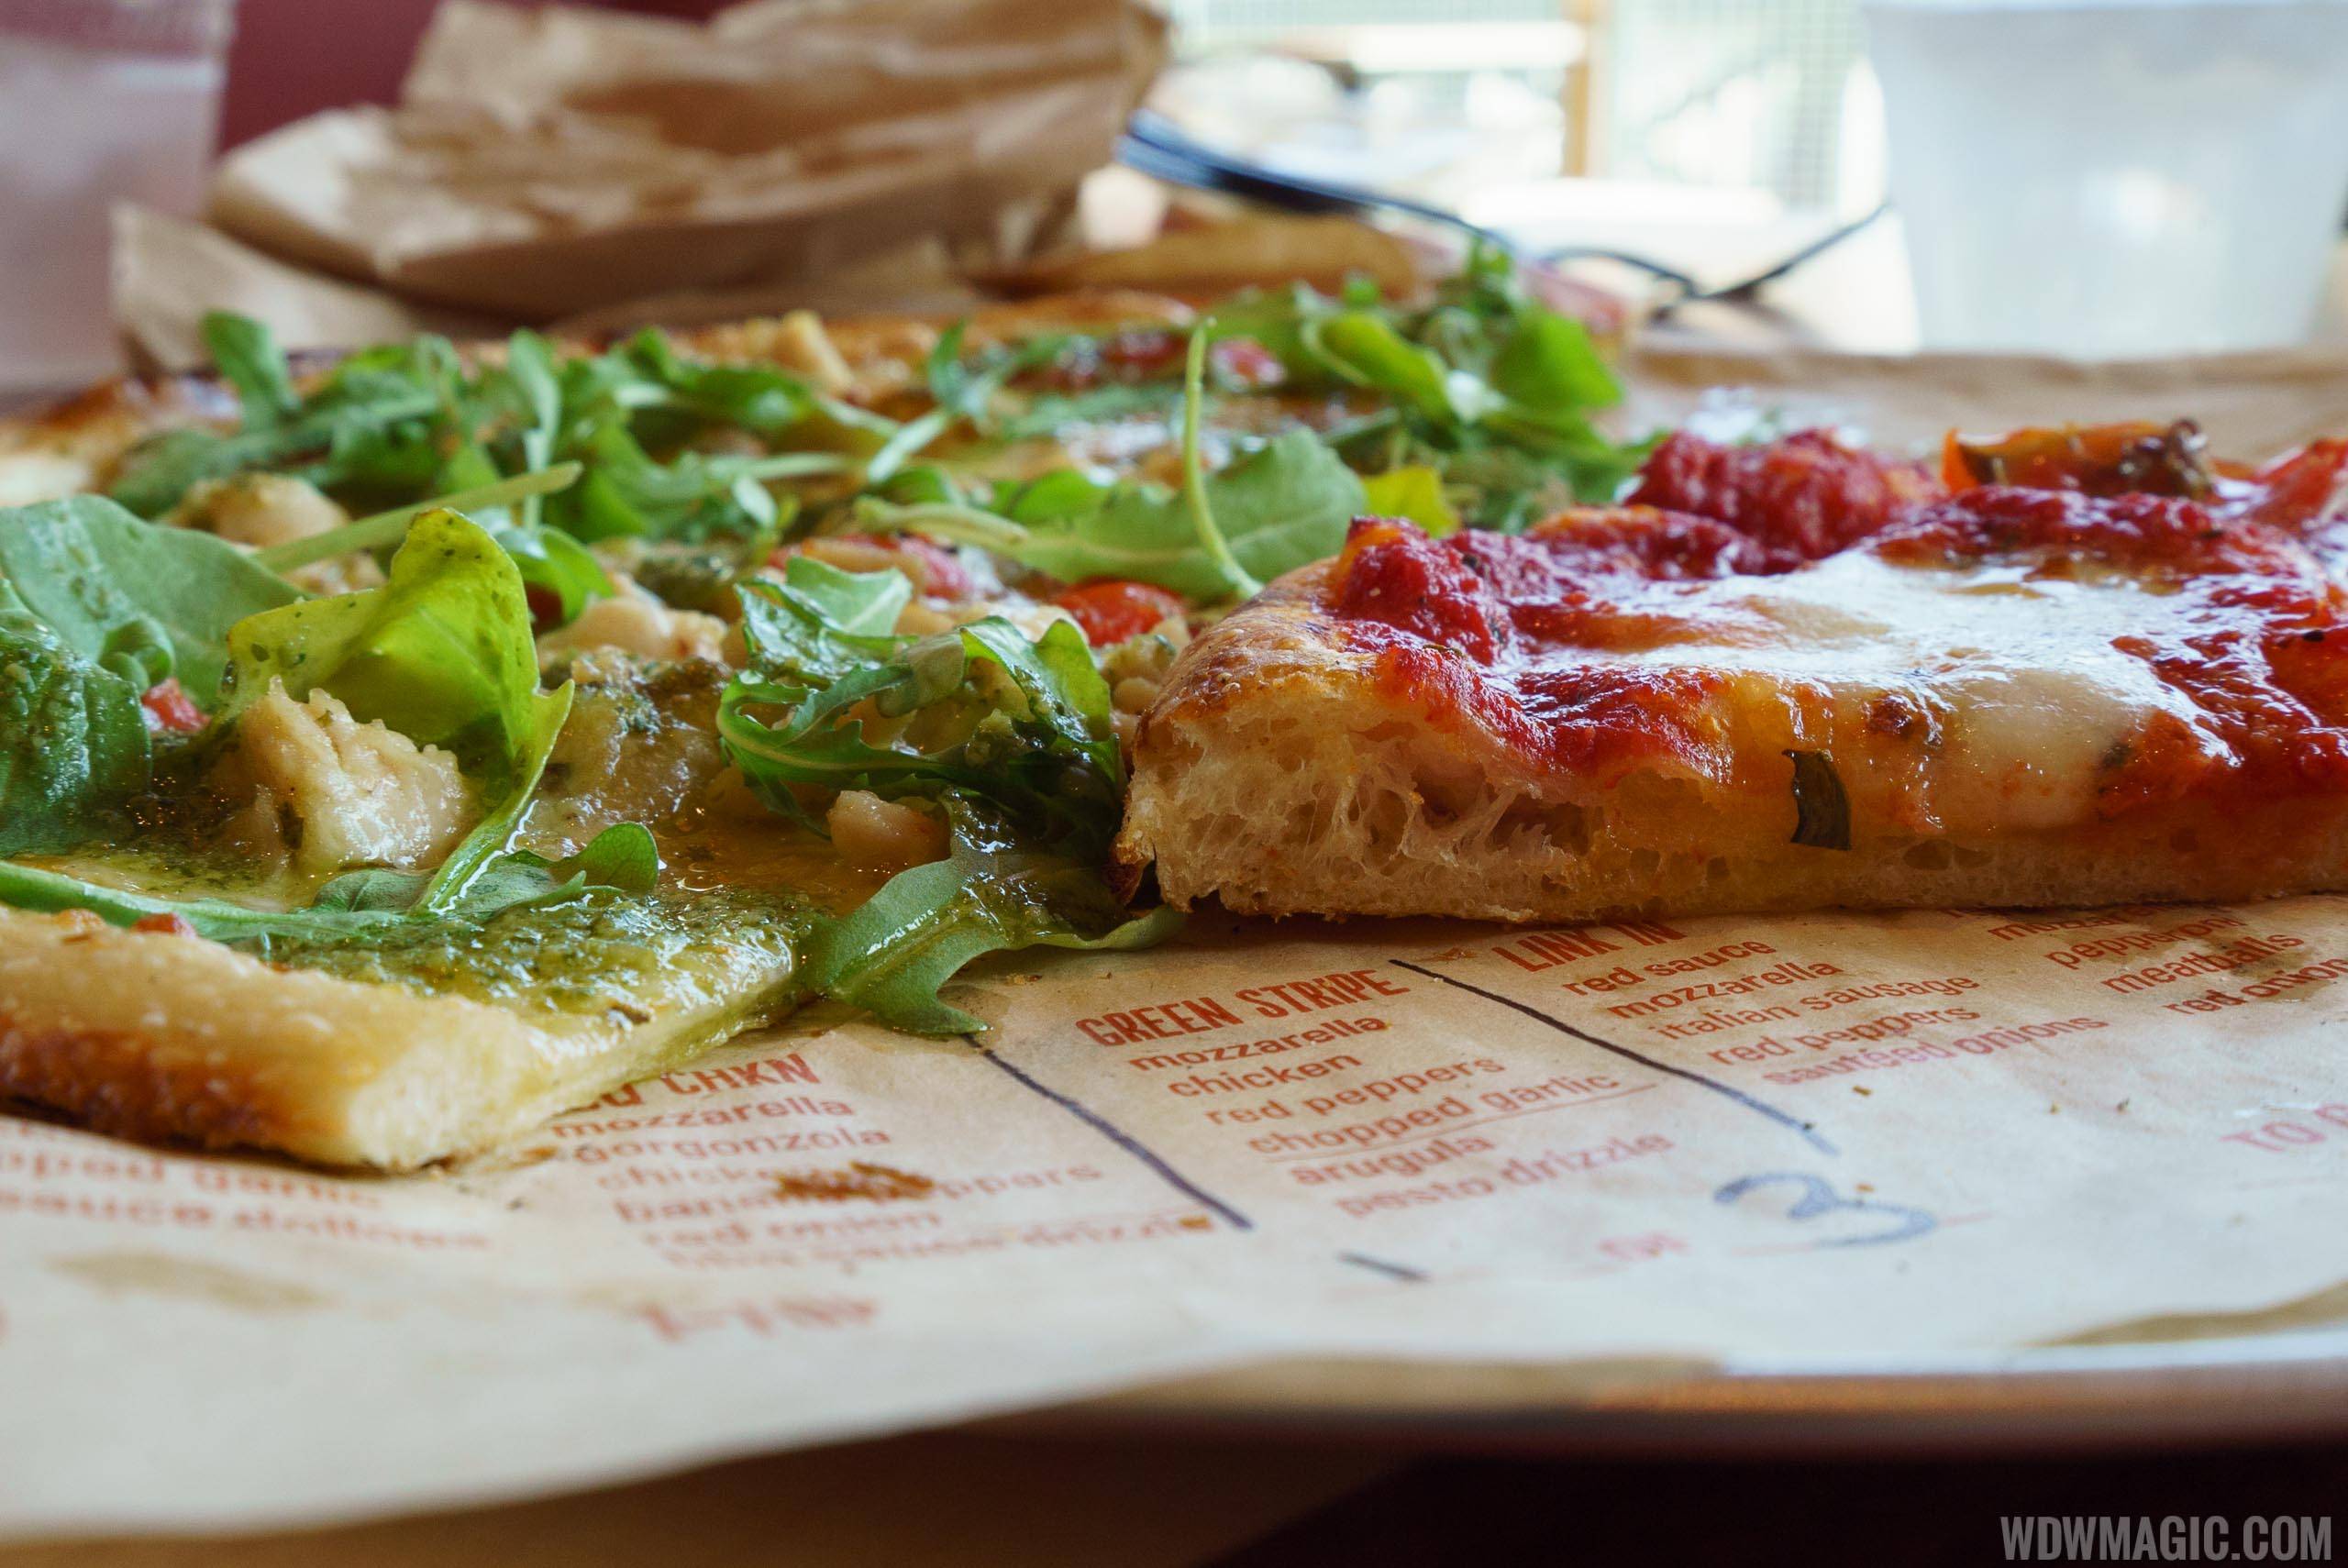 Comparison of Blaze Pizza regular and high-rise dough